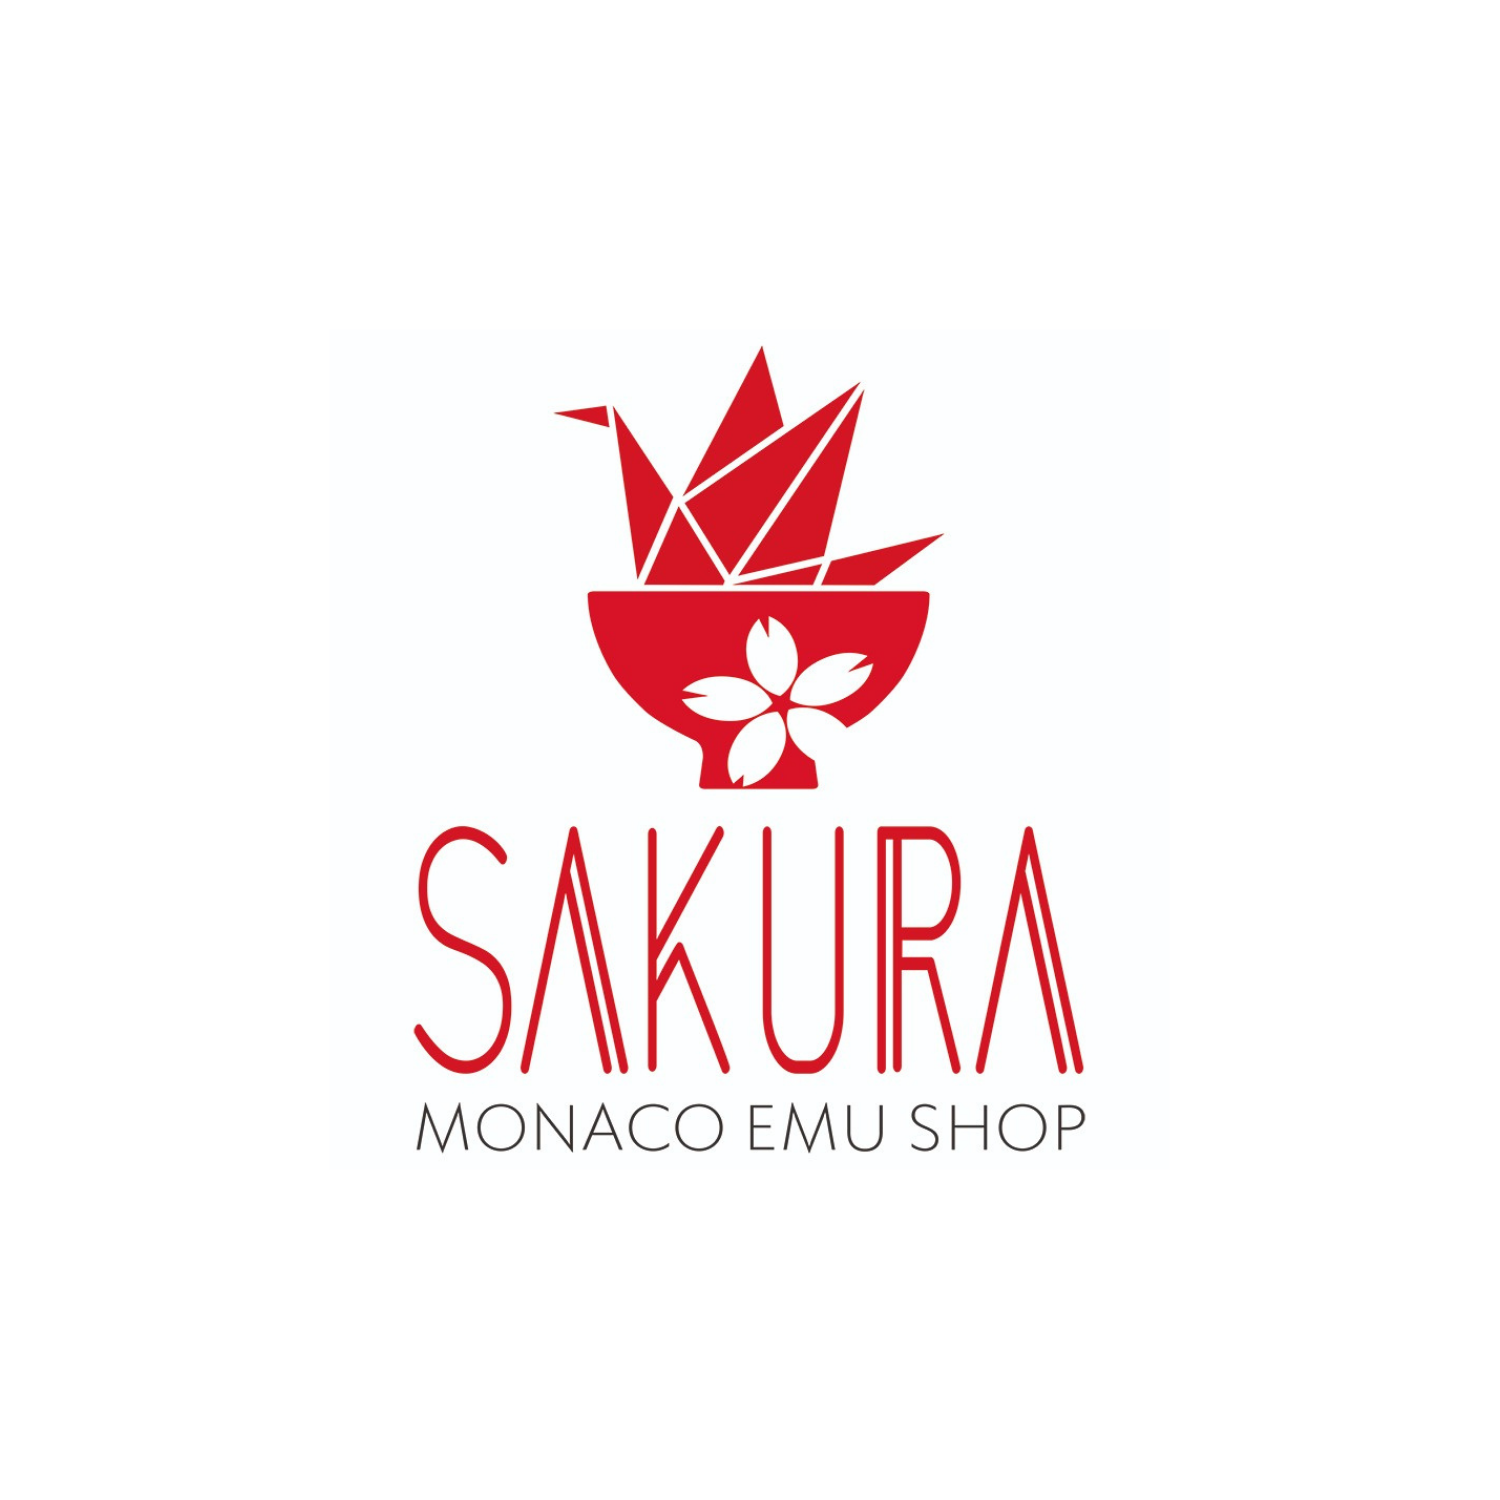 Read more about the article Monaco Emu Shop Sakura